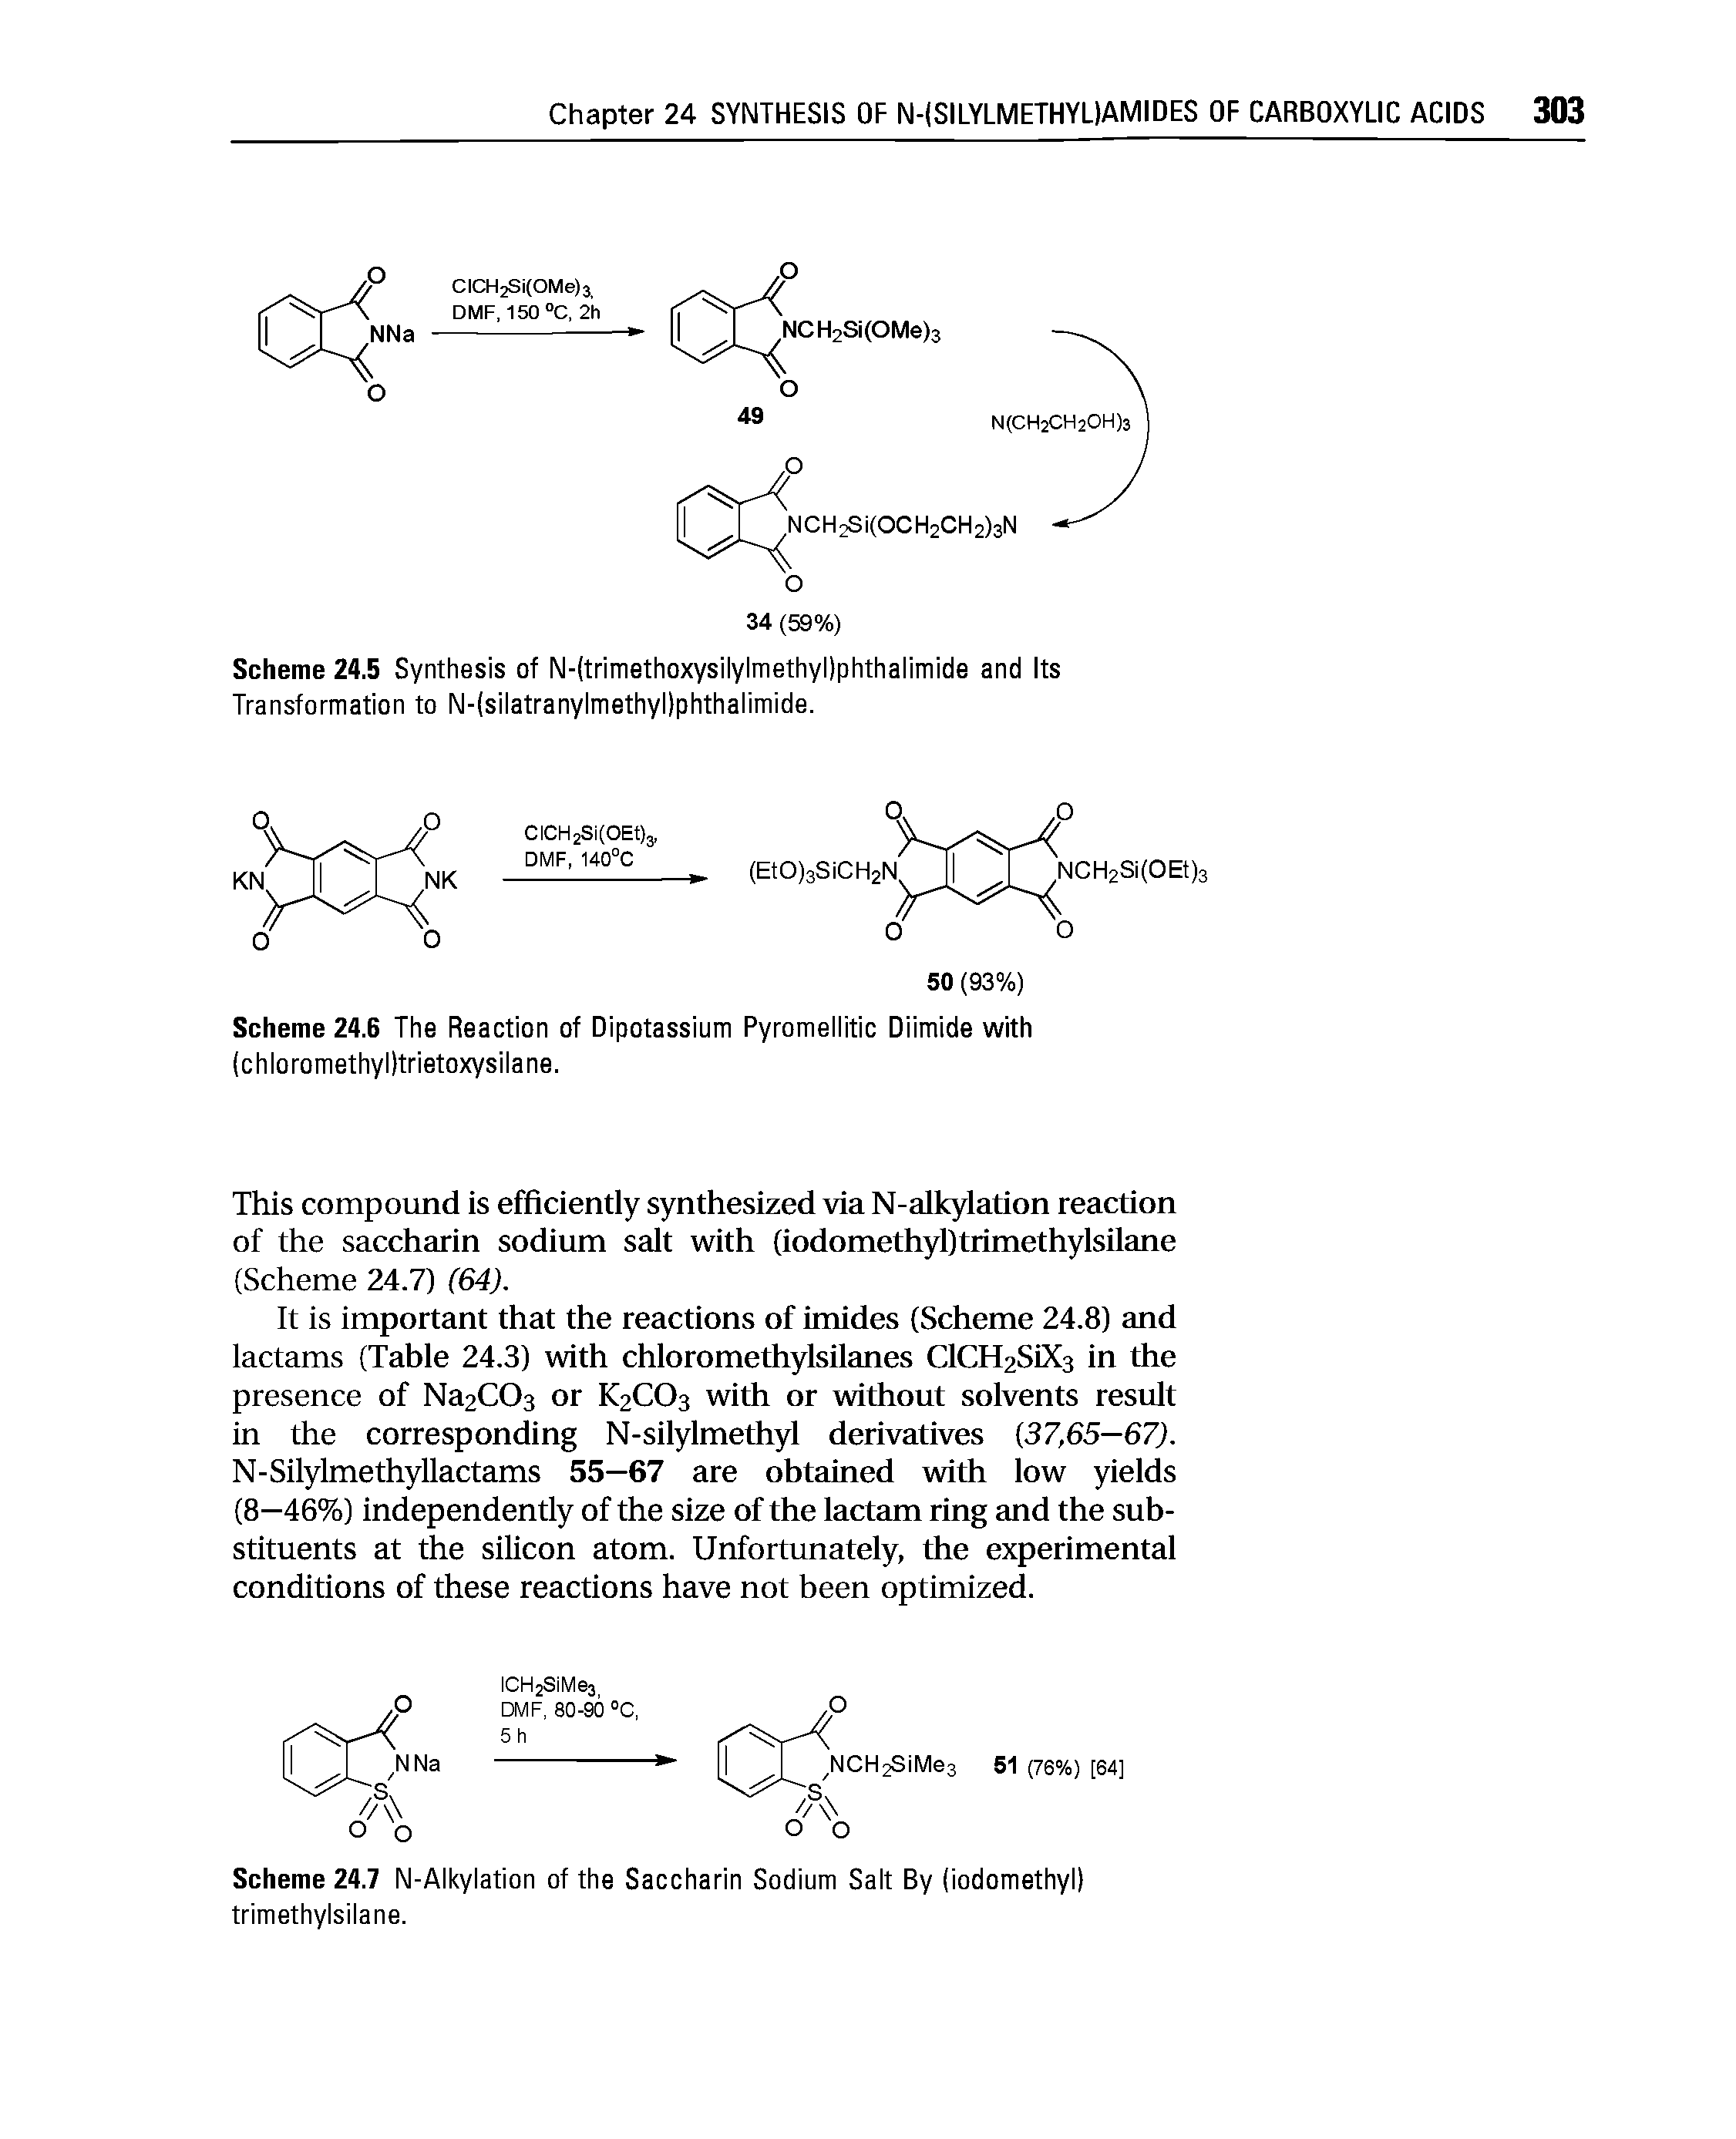 Scheme 24.7 N-Alkylation of the Saccharin Sodium Salt By (iodomethyl) trimethylsilane.